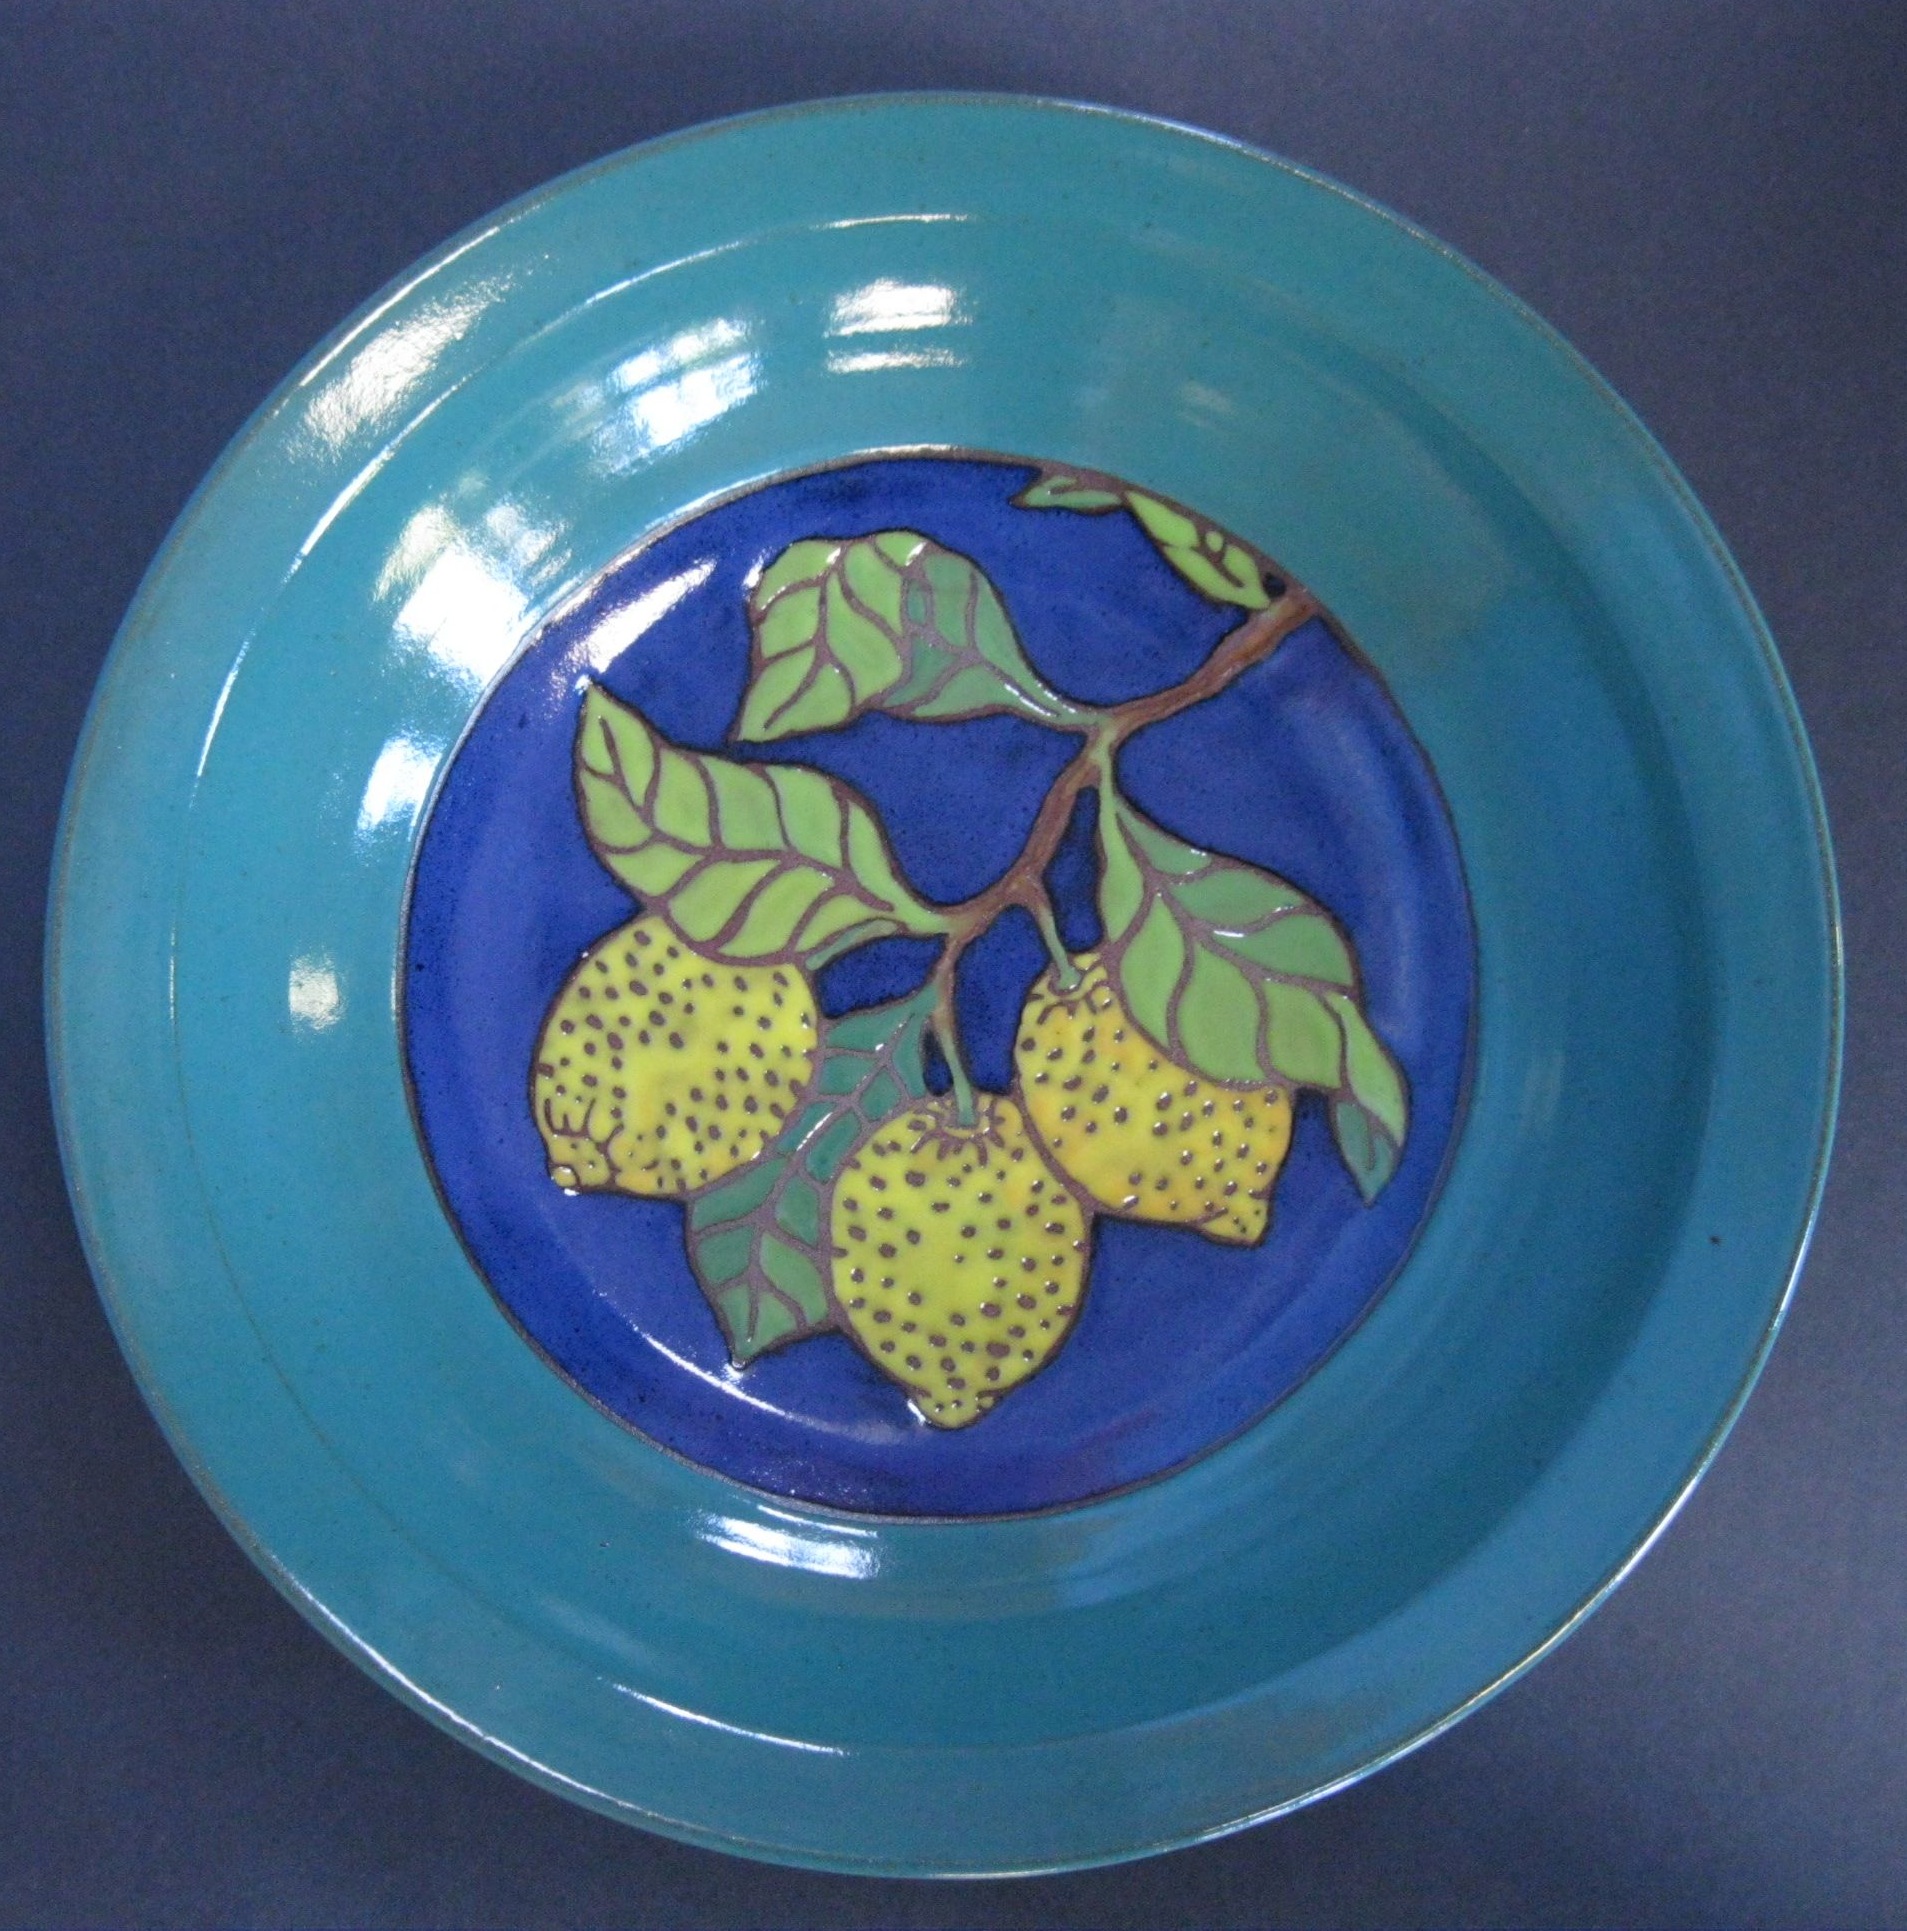 Cobalt Blue and Turquoise Bowl with Cuerda Seca Lemon Design